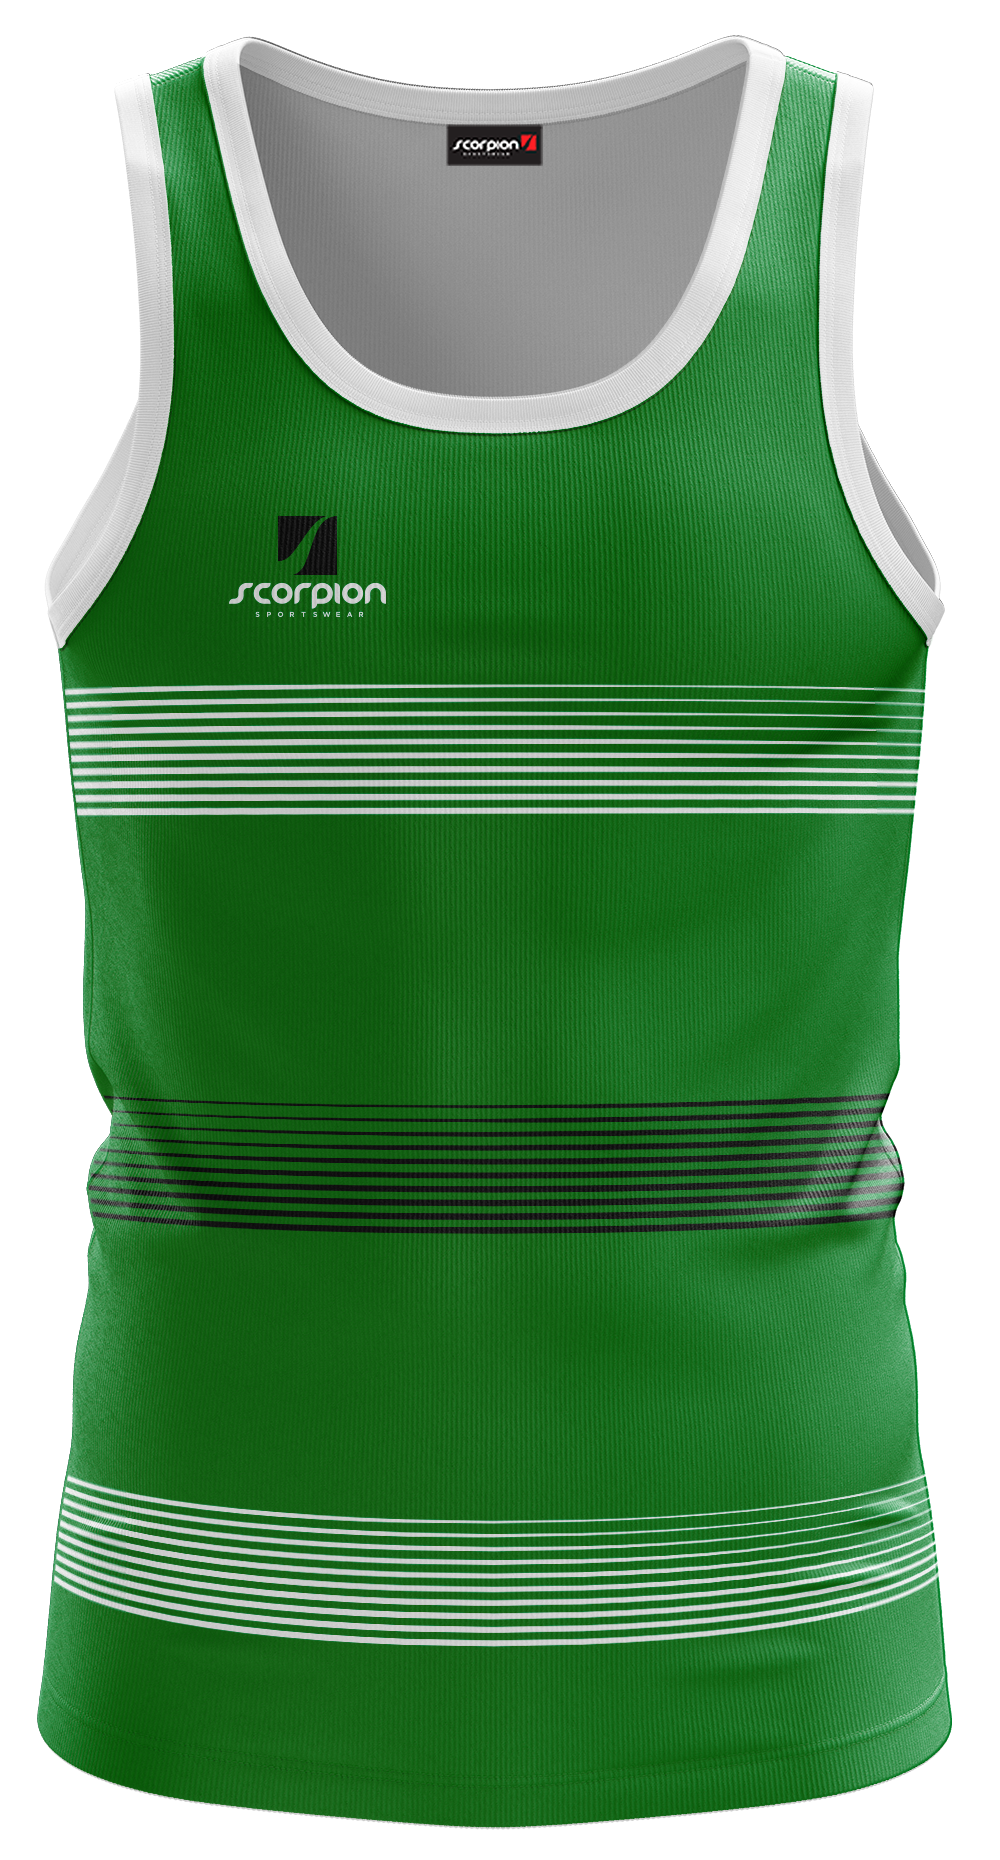 Scorpion Vests Pattern 2 - Green/Black/White